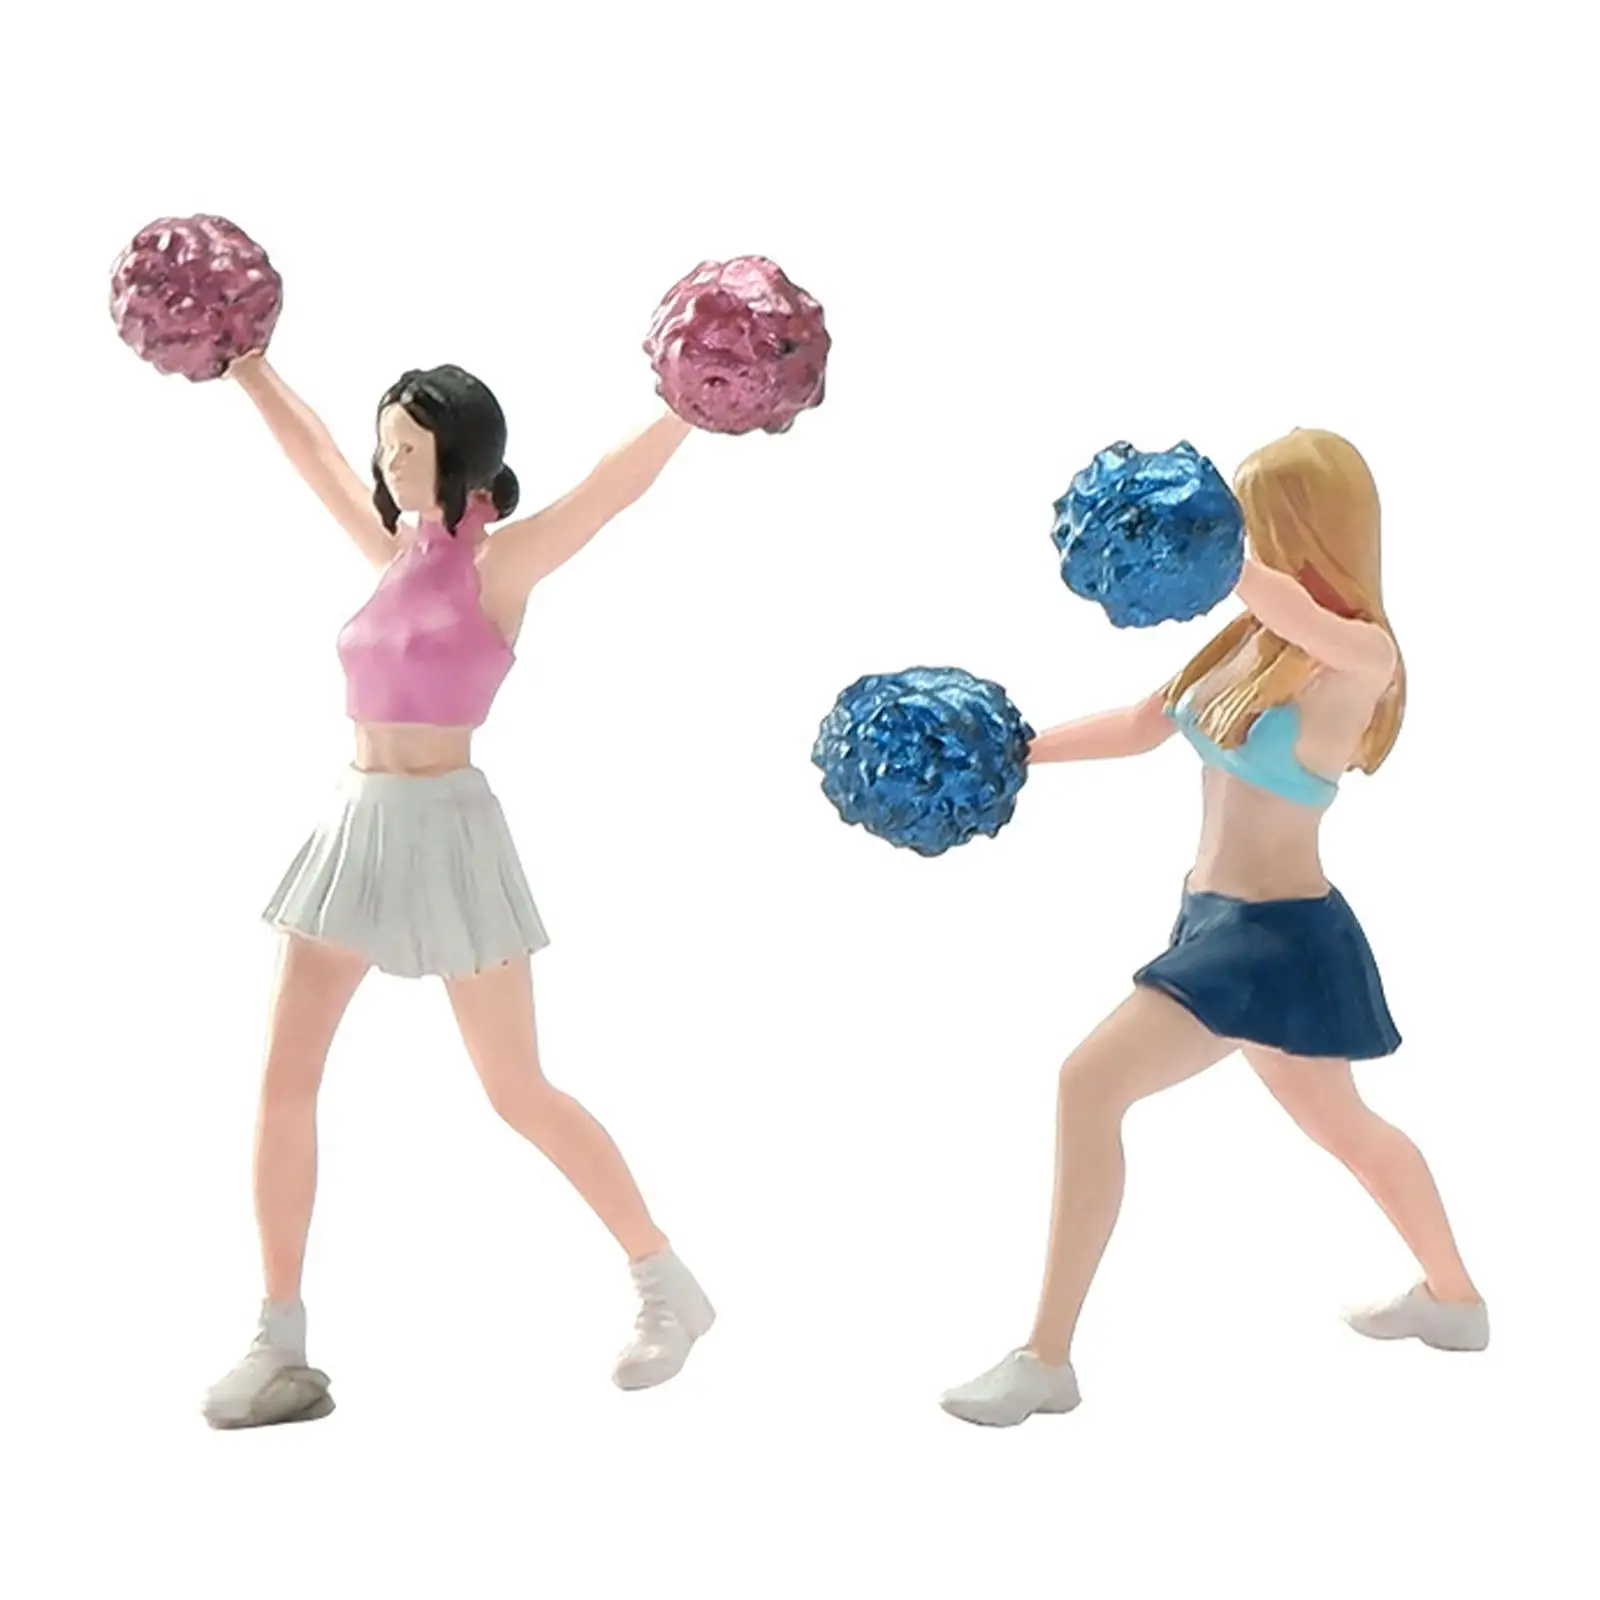 1/64 Cheerleader Model Painted Figures for Train Station Layout Desktop Decoration Miniature Scene Sand Table Micro Landscape